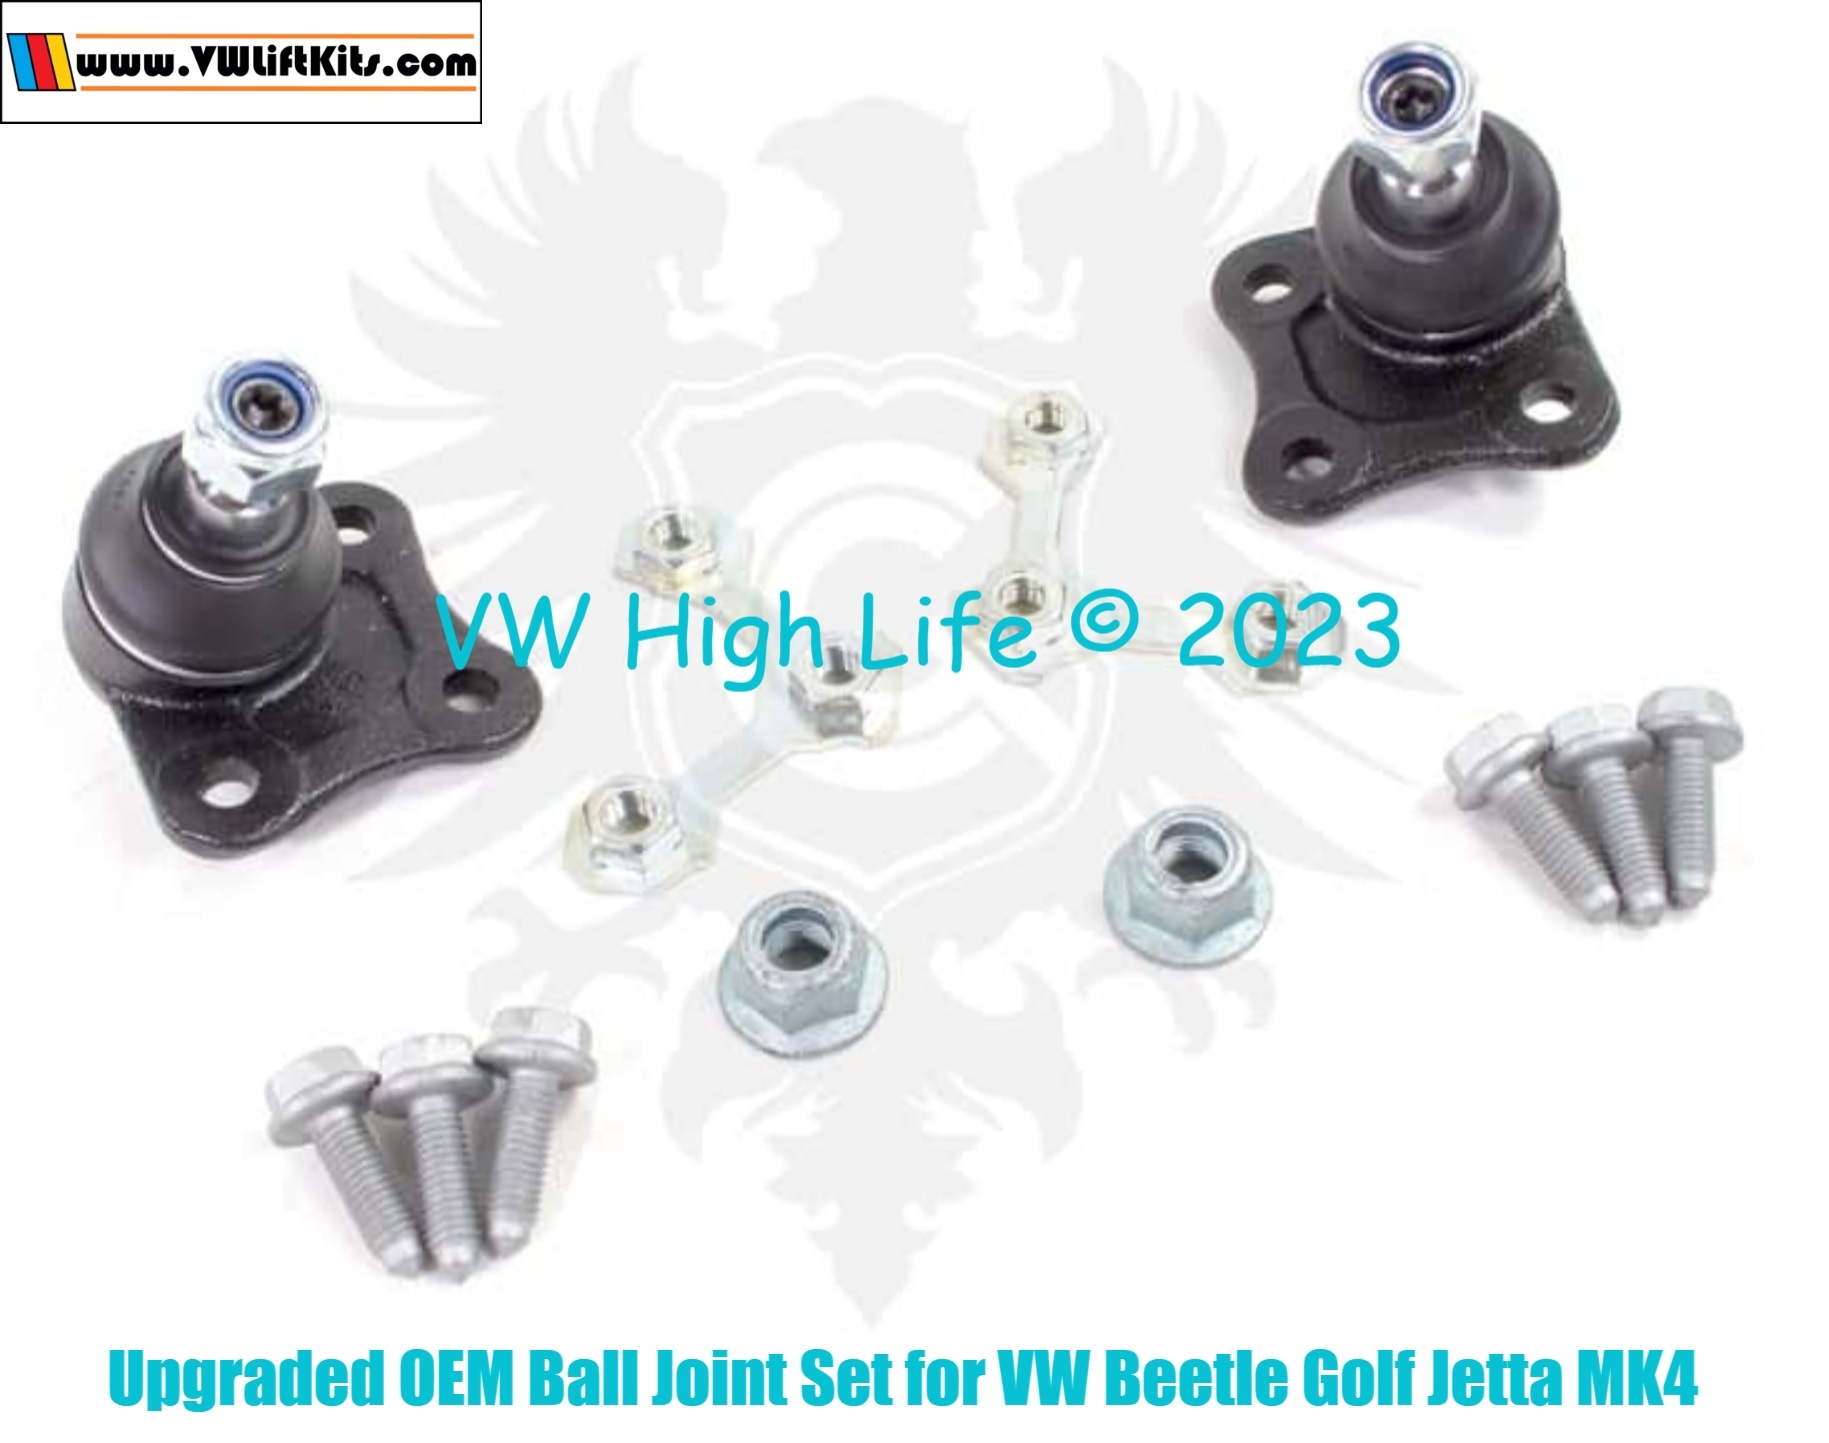 Ball Joint Set for MK4 VW Beetle Golf Jetta